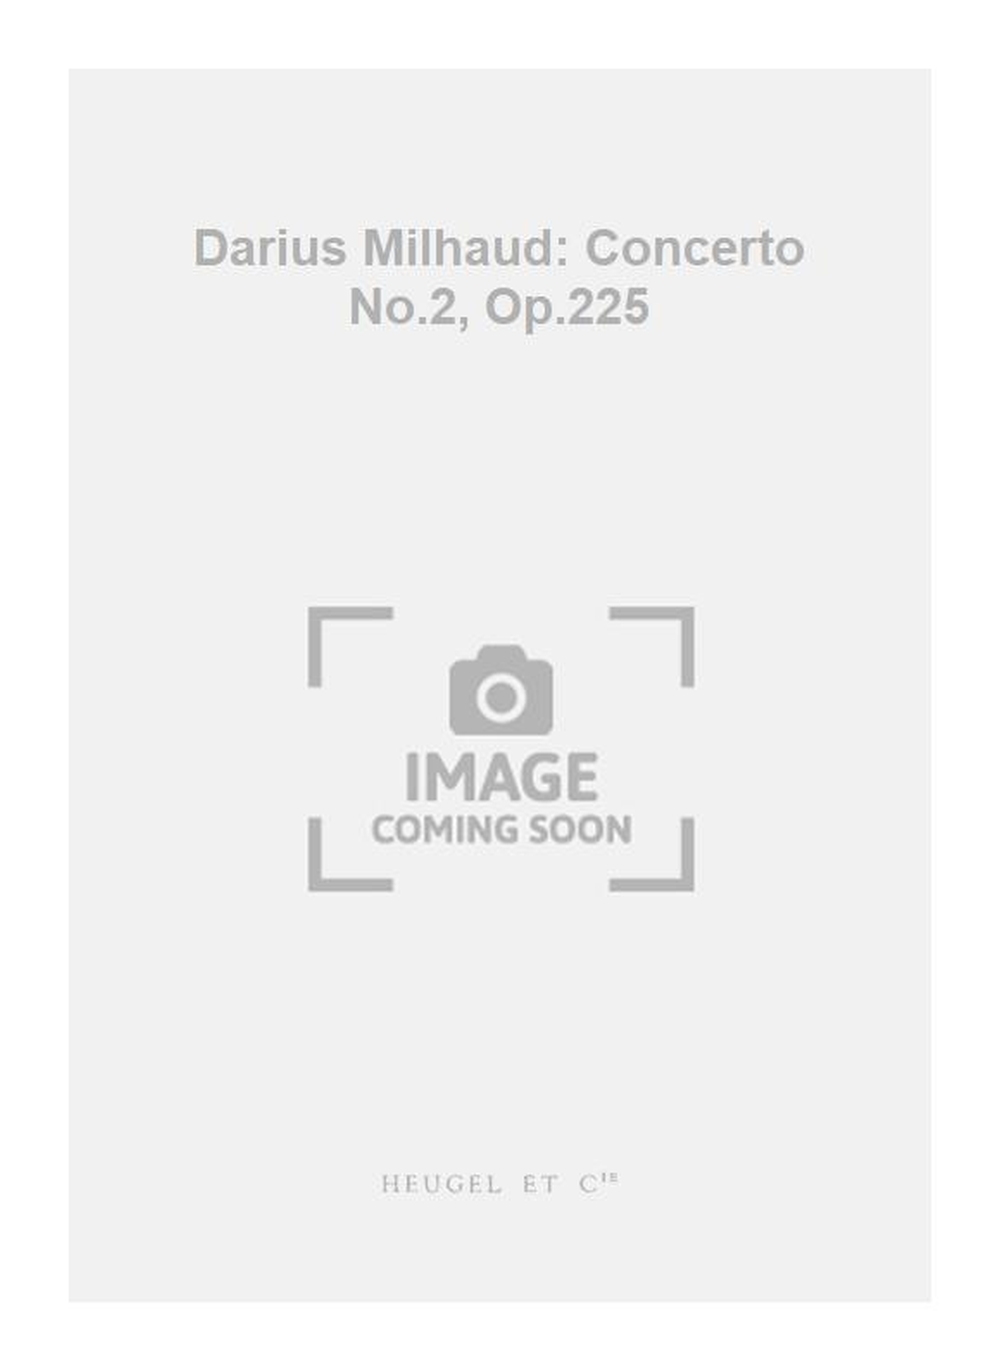 Darius Milhaud: Darius Milhaud: Concerto No.2  Op.225